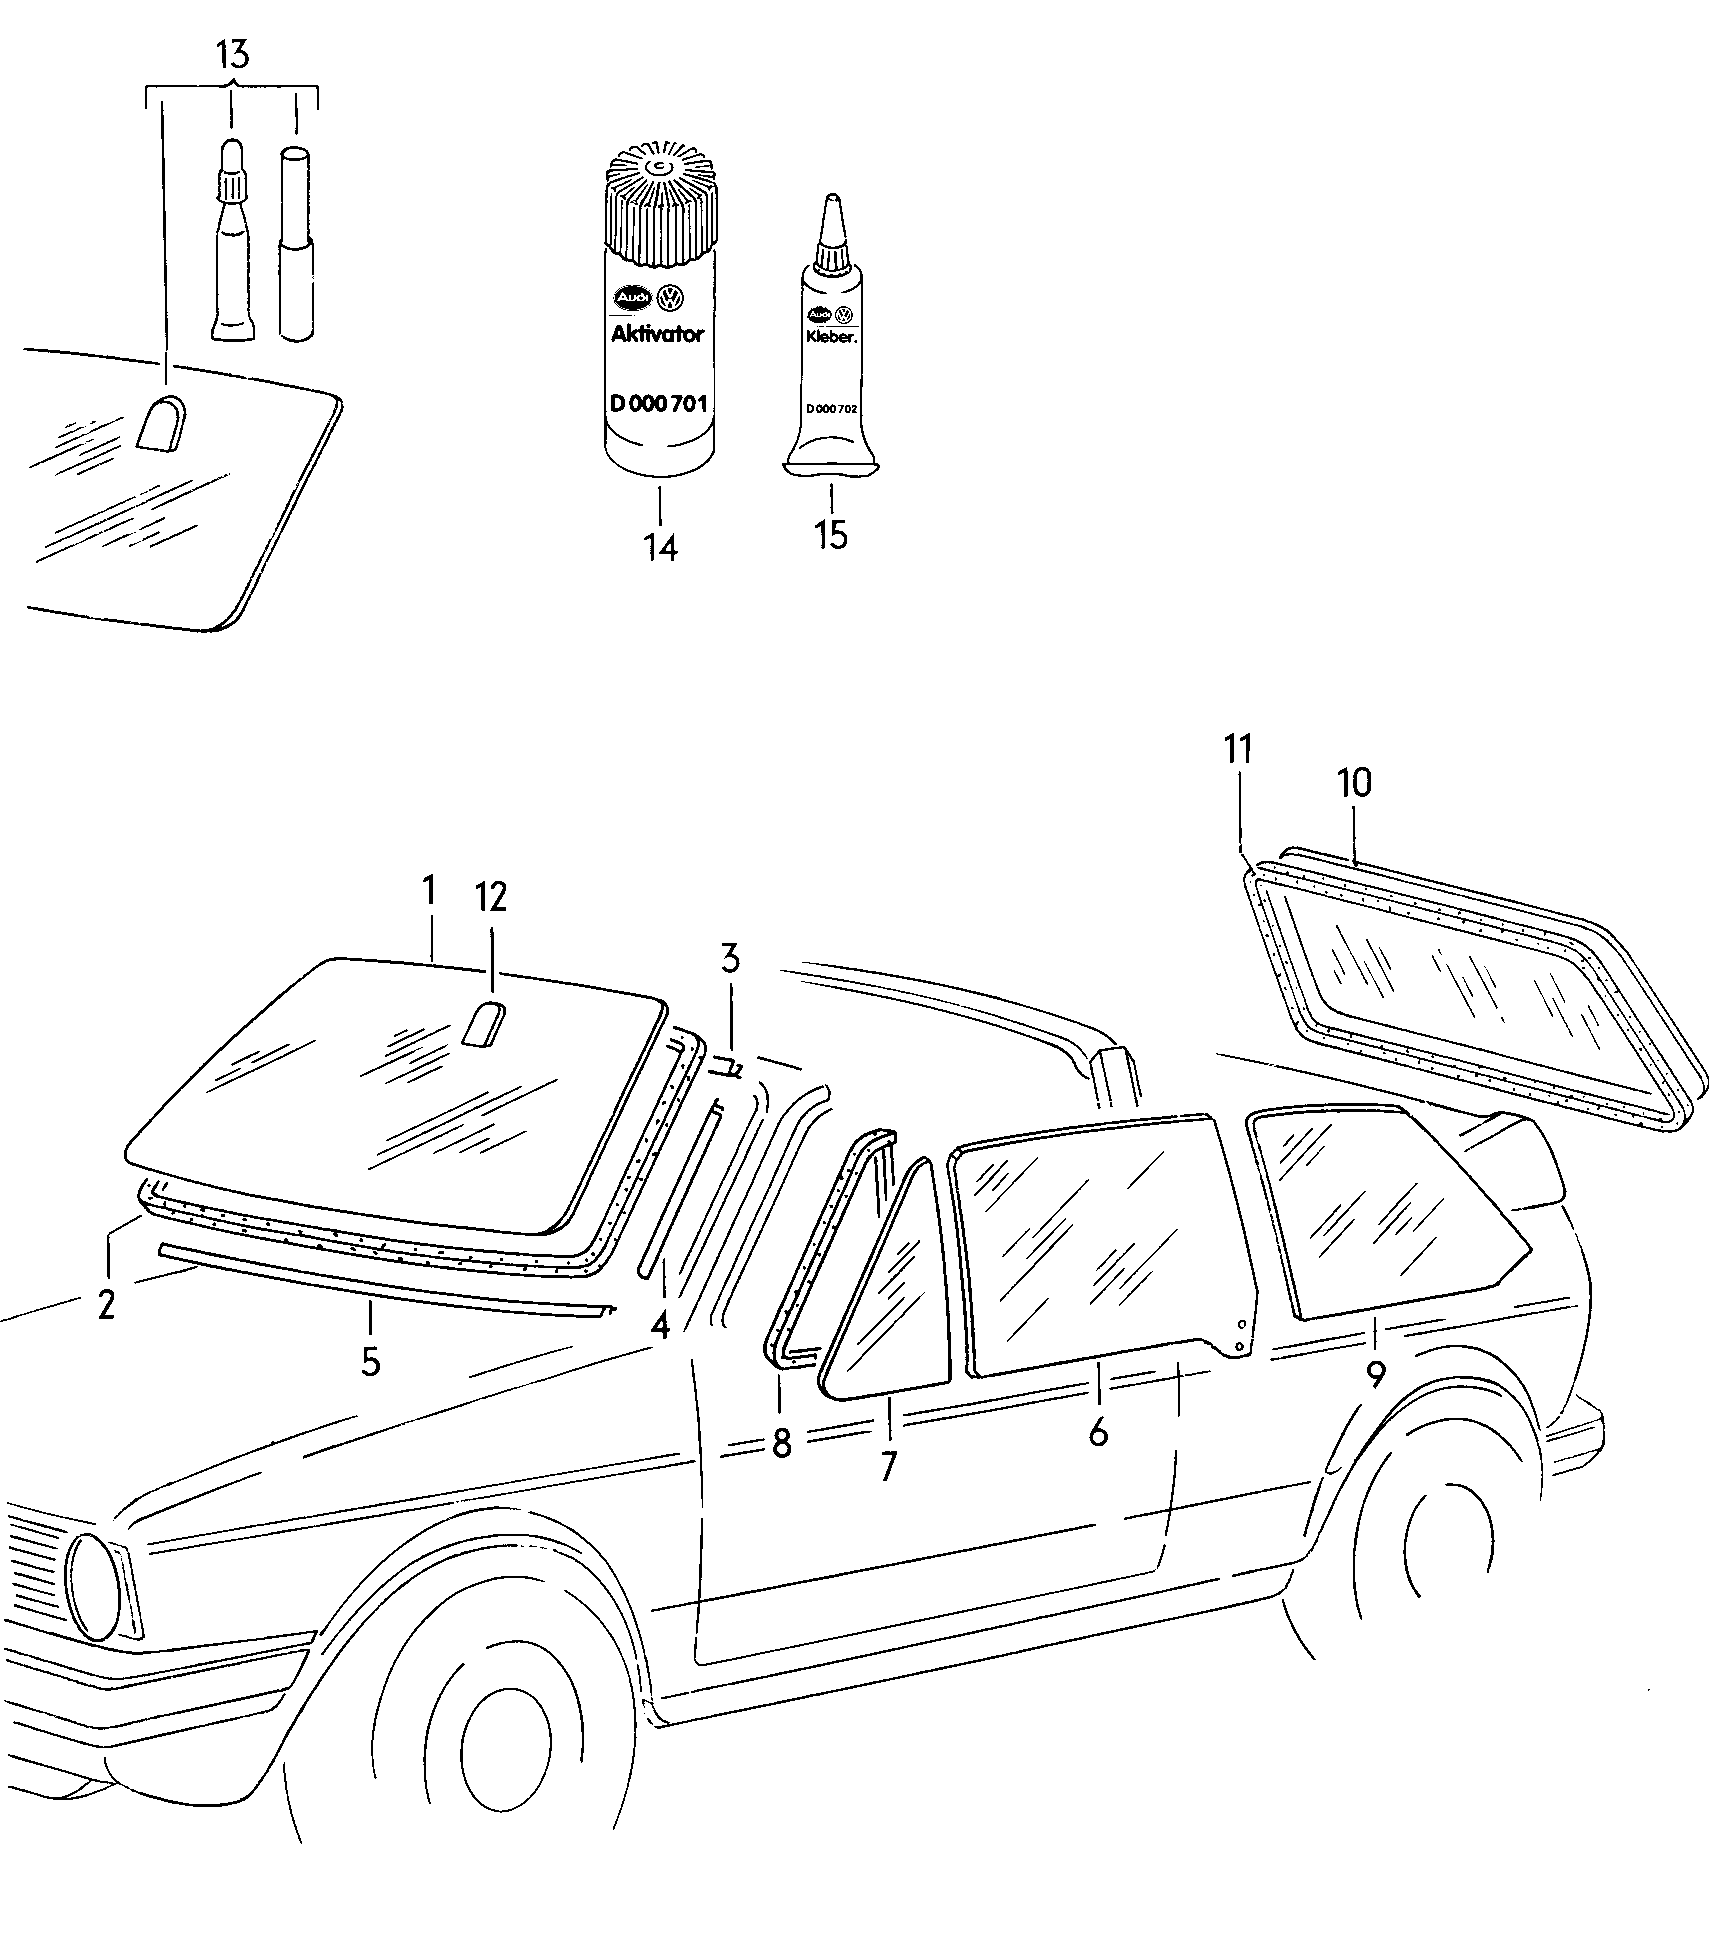 10005  - Golf Cabriolet - goc